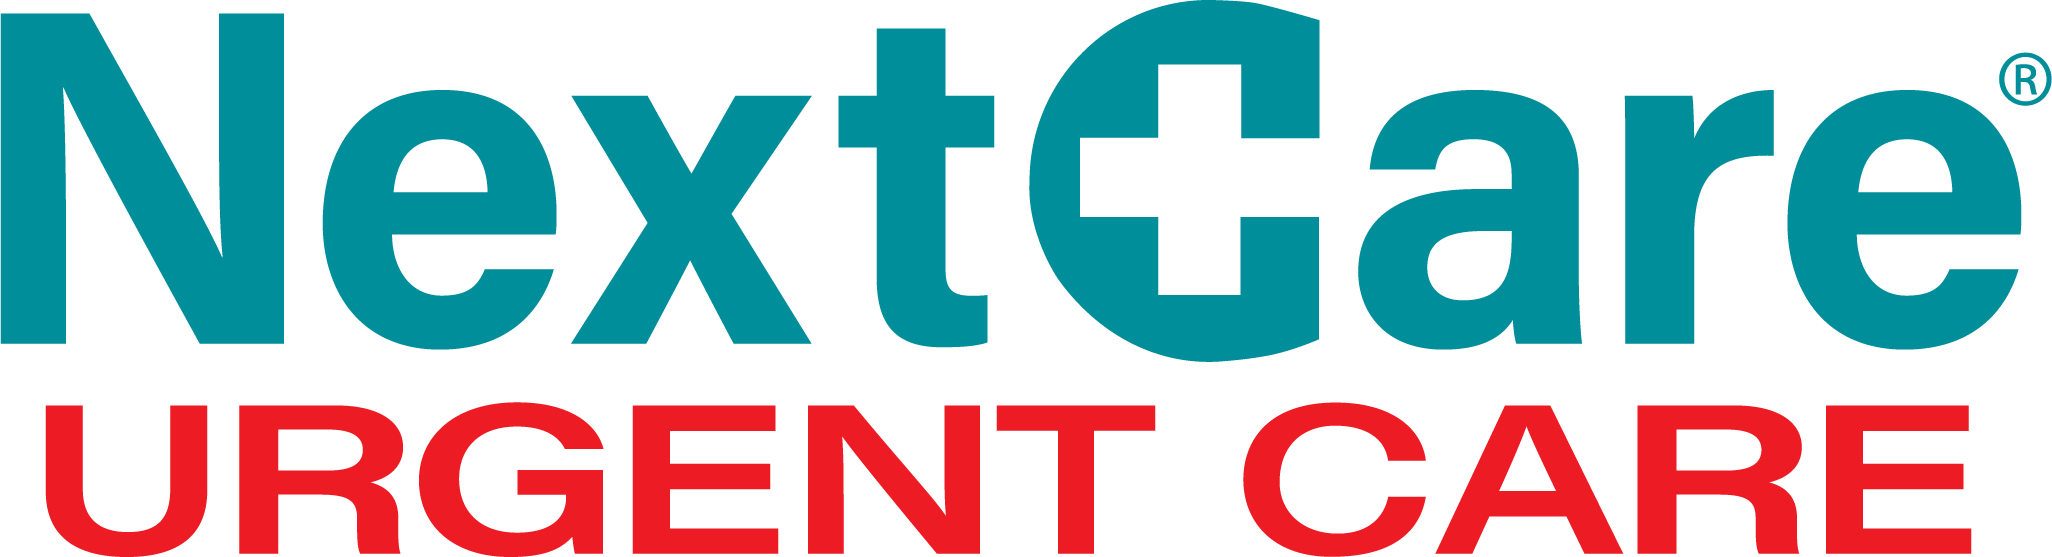 Nextcare Urgent Care - Bluegrass - VACCINE Logo